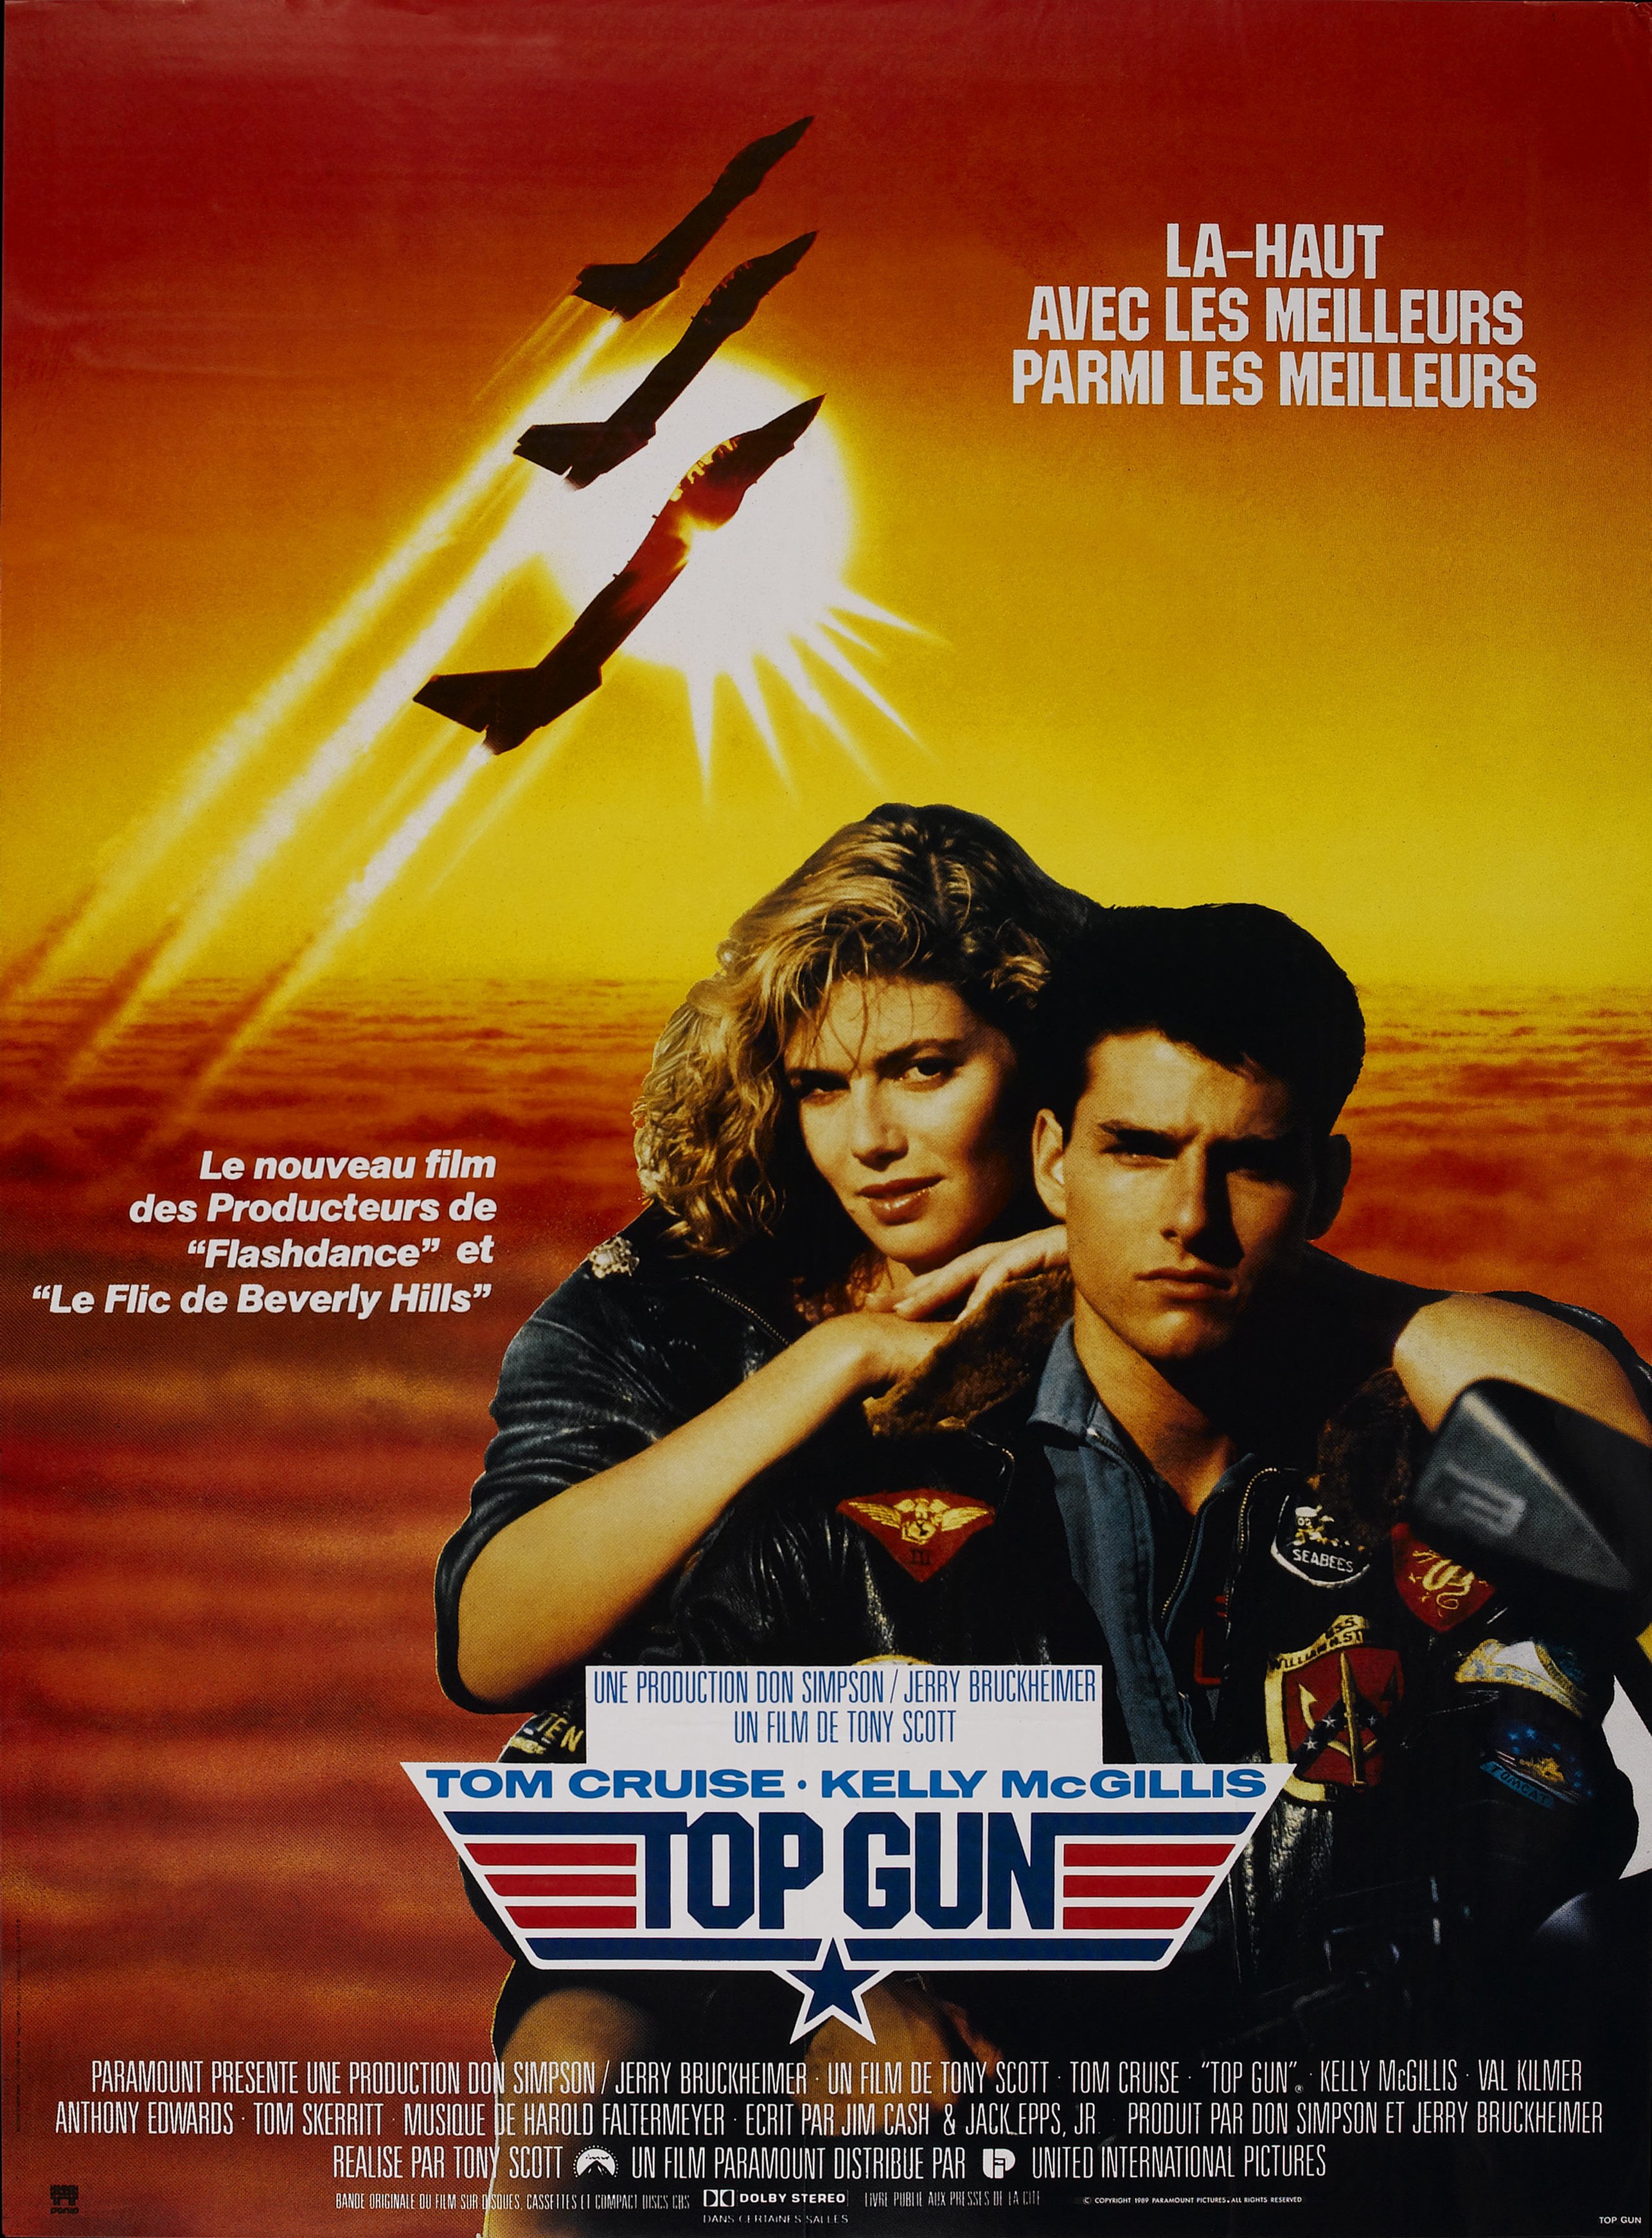 TOP GUN - TOM CRUISE BOX OFFICE 1986 - BOX OFFICE STORY